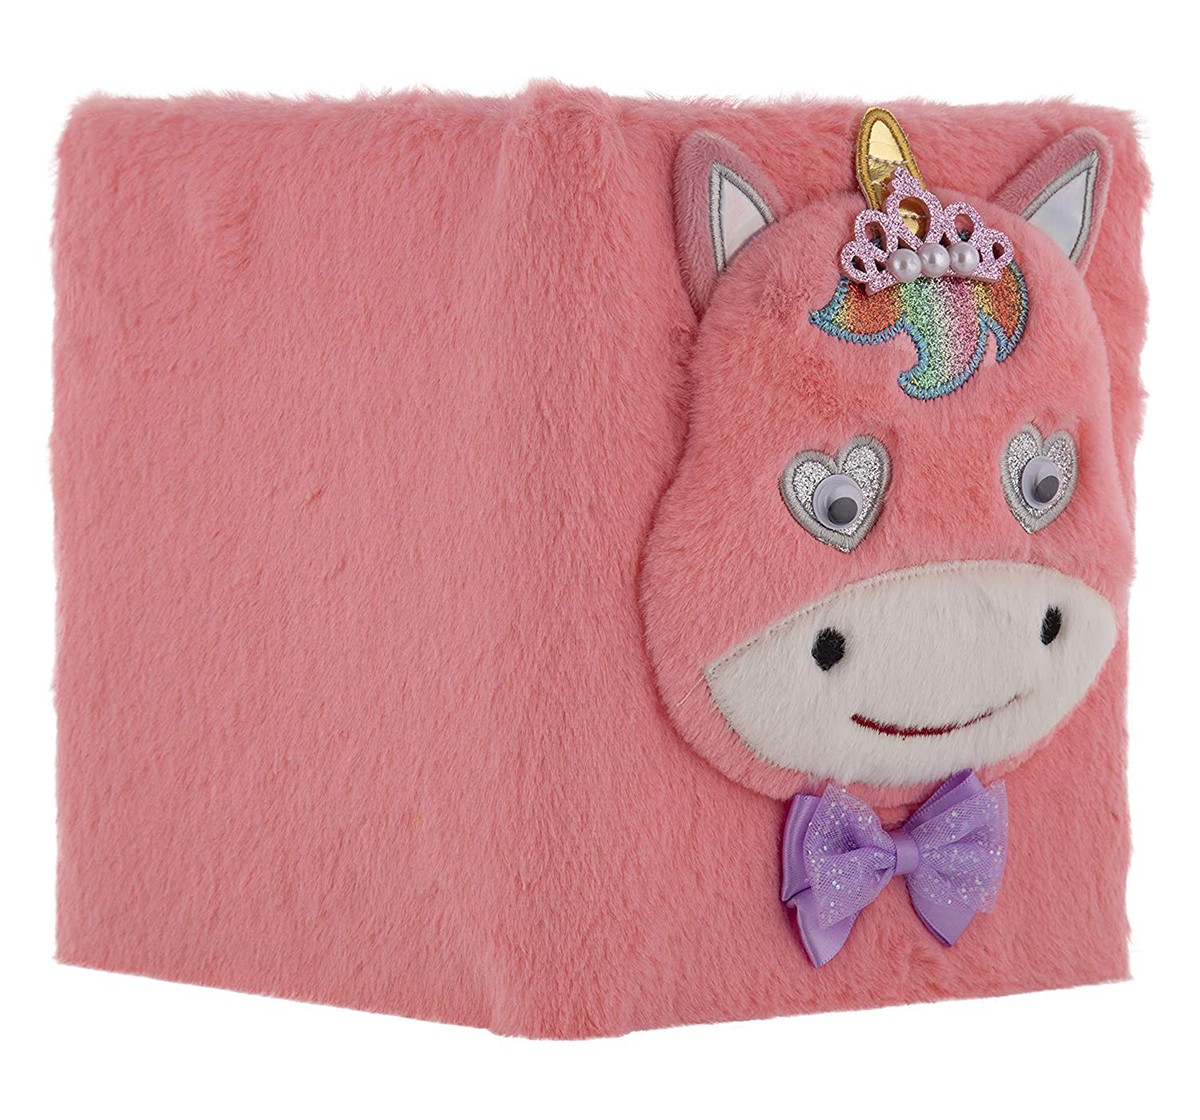 Mirada Princess Bella Plush Study & Desk Accessories for Kids age 3Y+ (Pink)